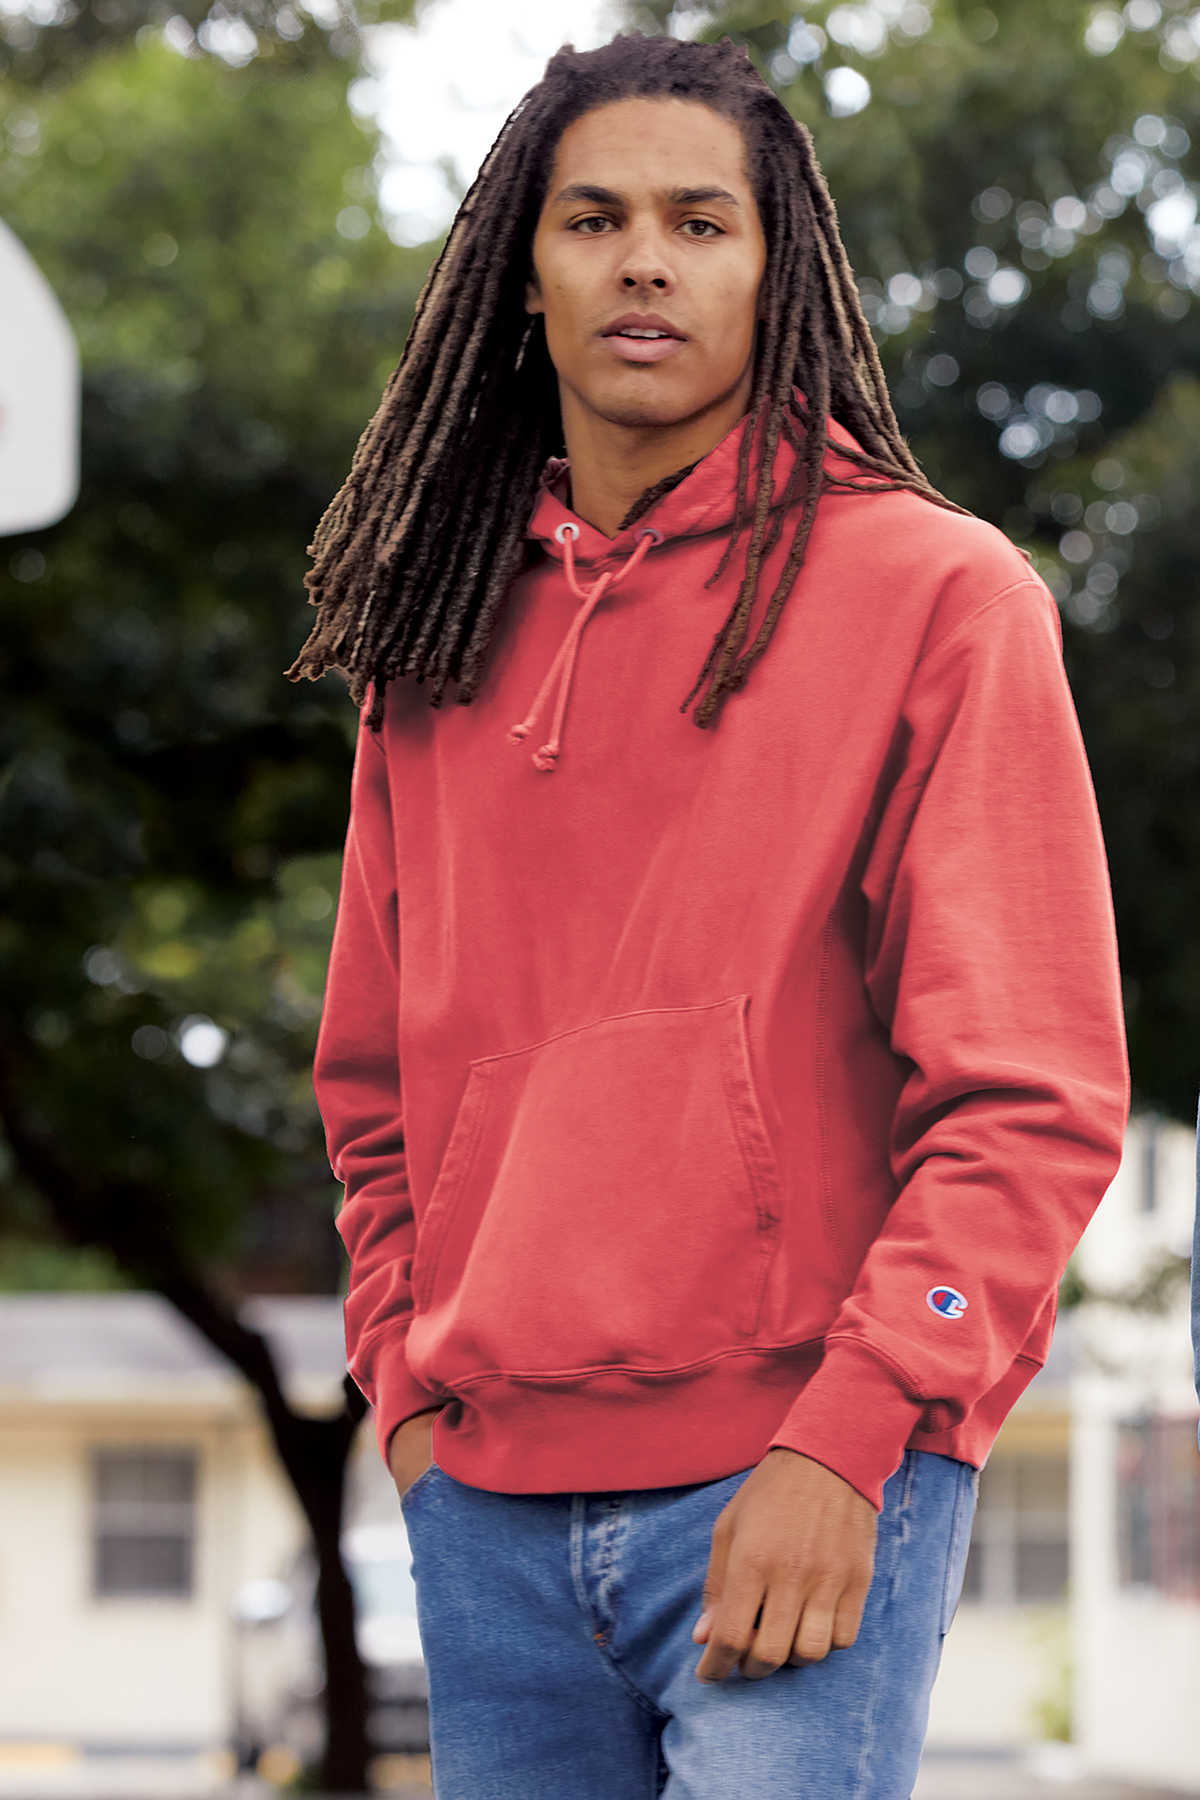 Thrust progressiv Symphony Champion Reverse Weave Garment-Dyed Hooded Sweatshirt | Product | SanMar